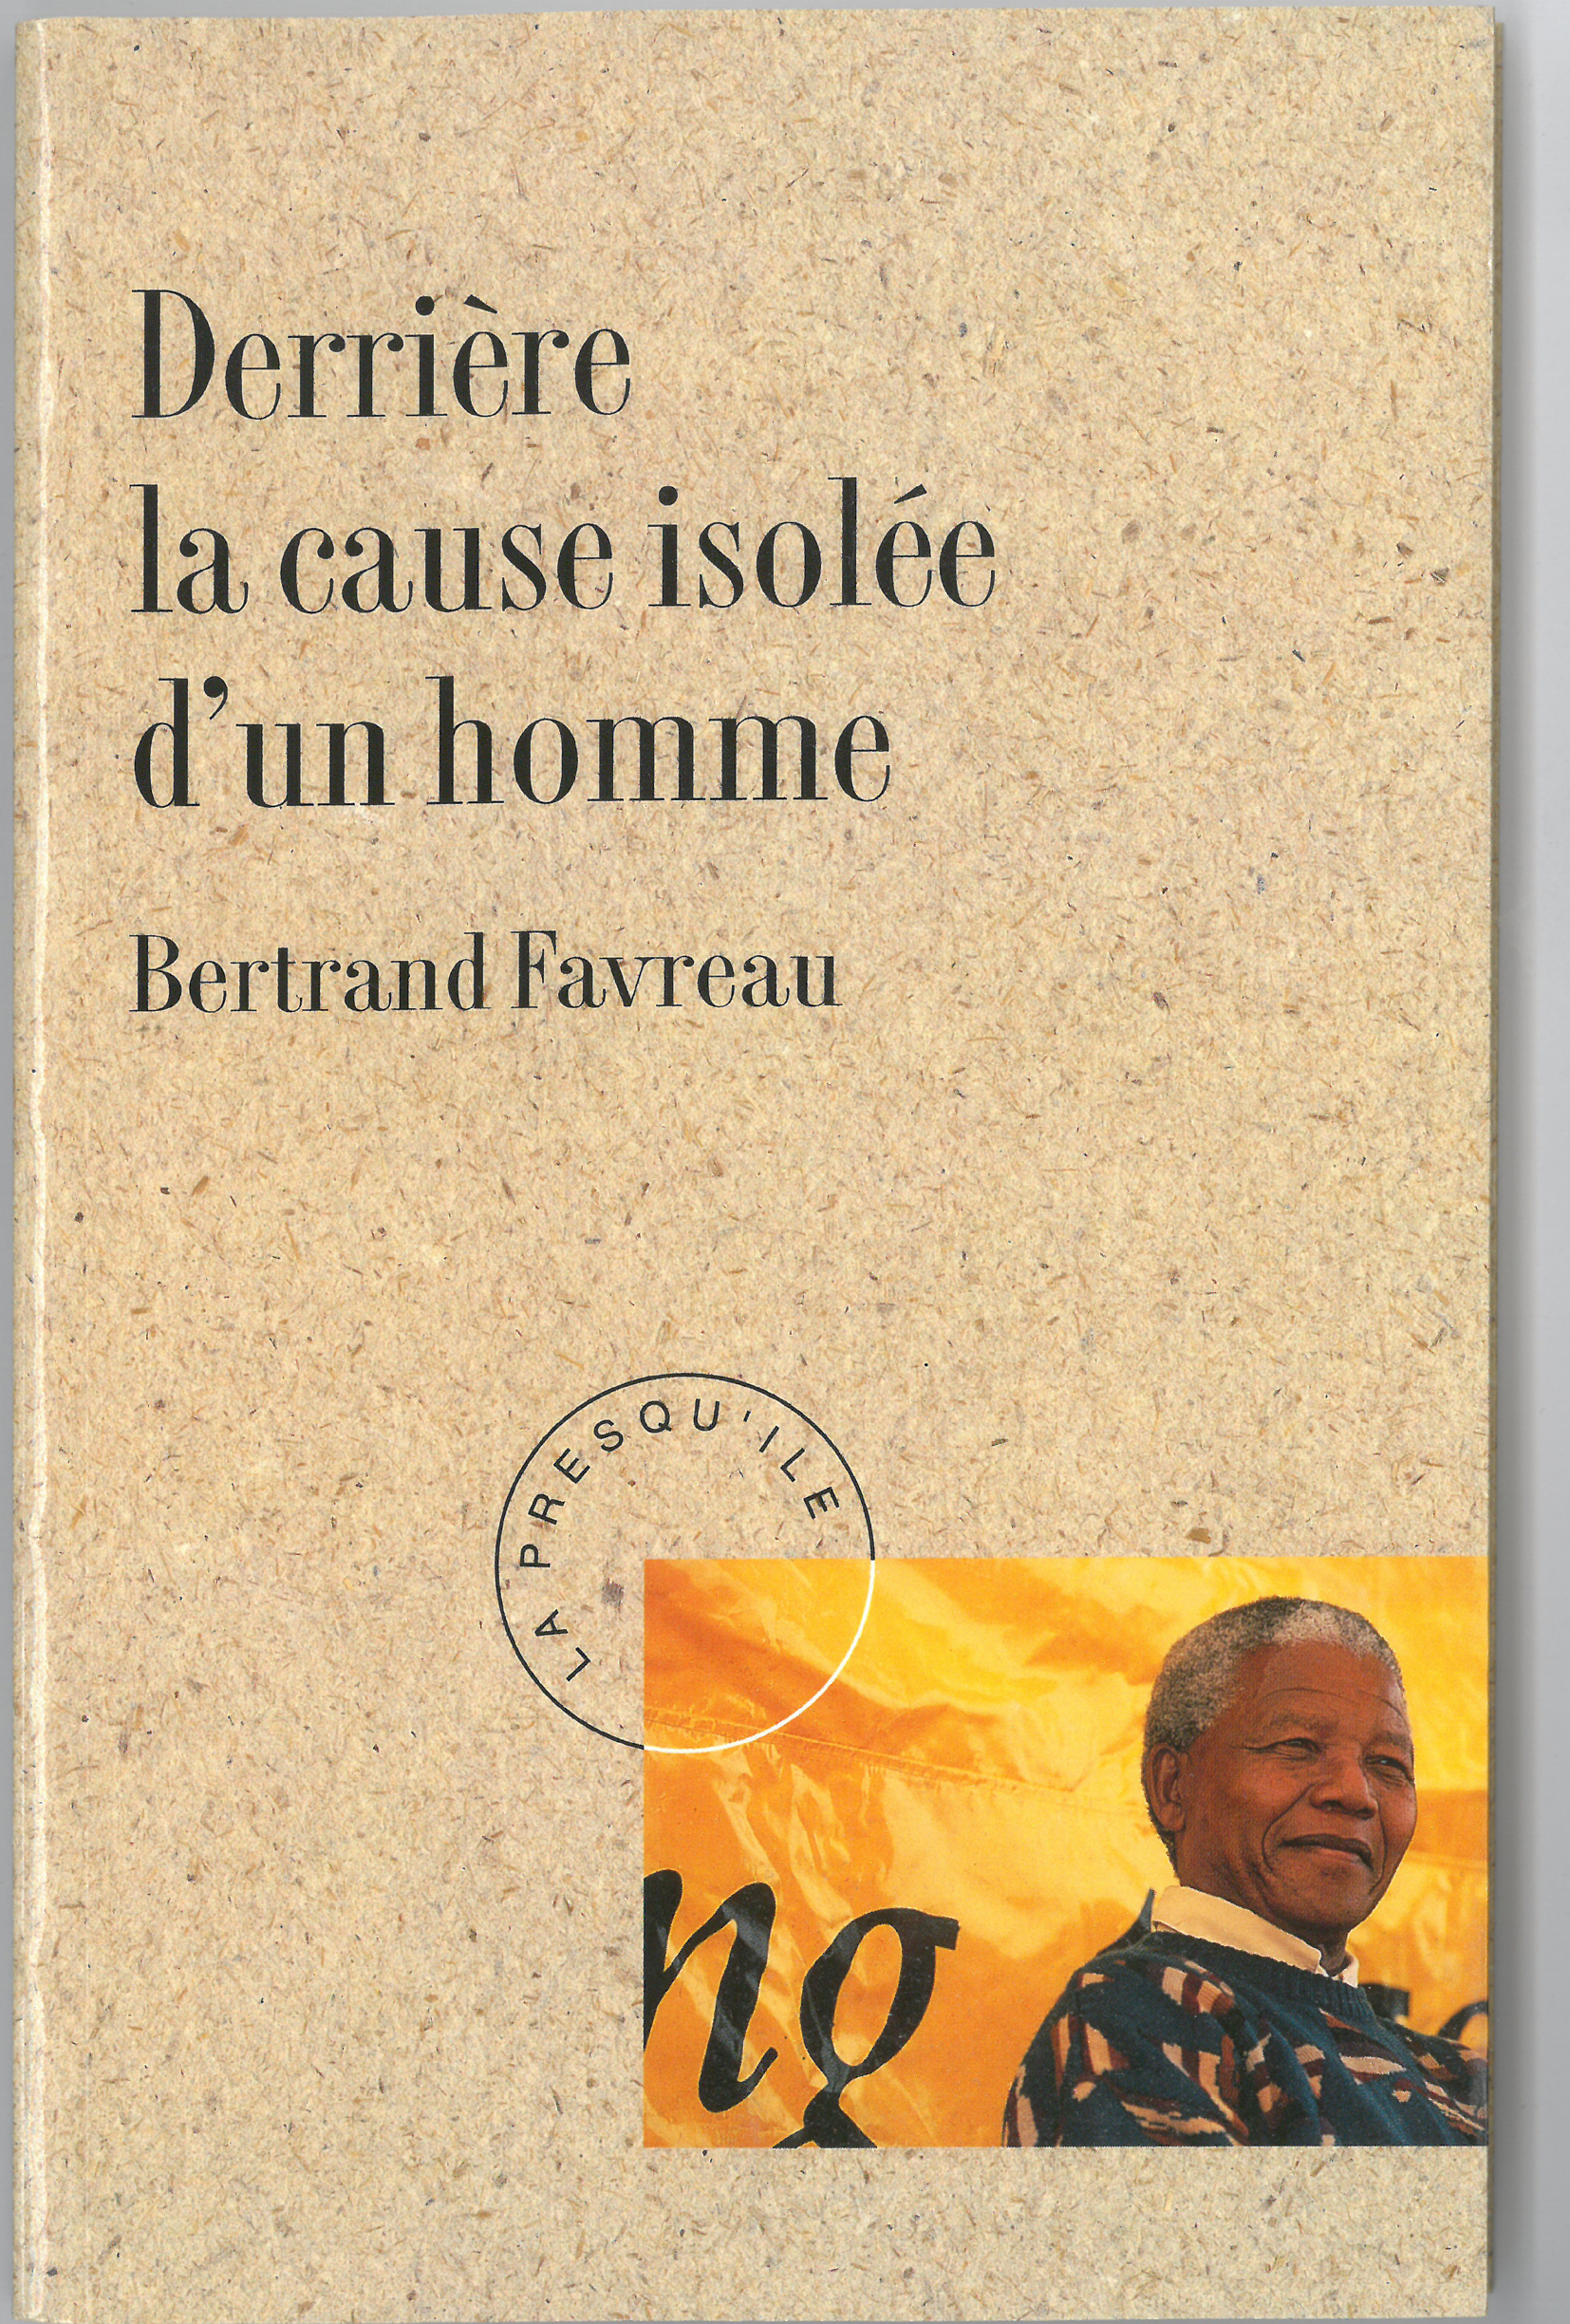 Bertrand Favreau